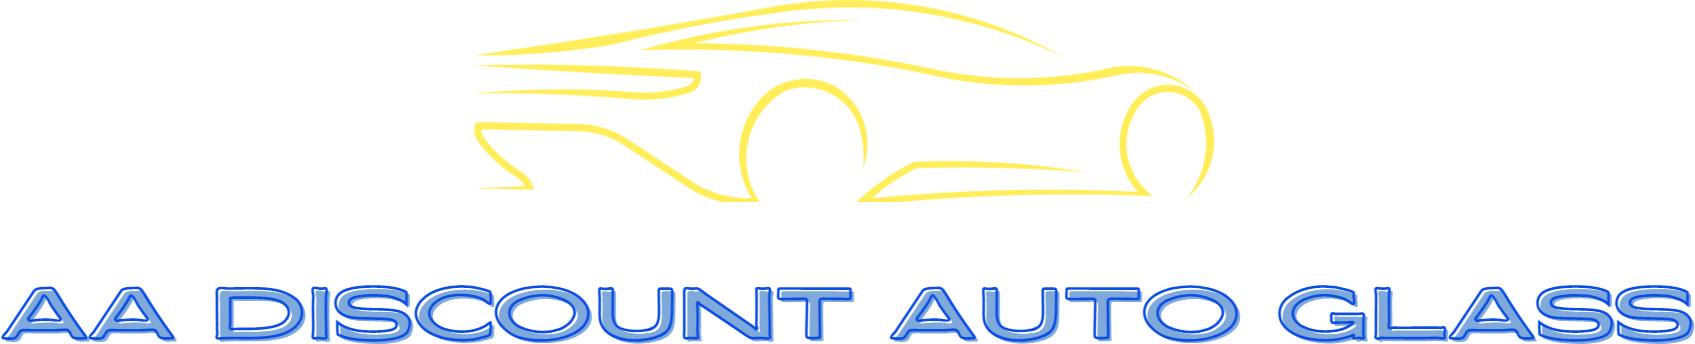 AA Discount Auto Glass logo